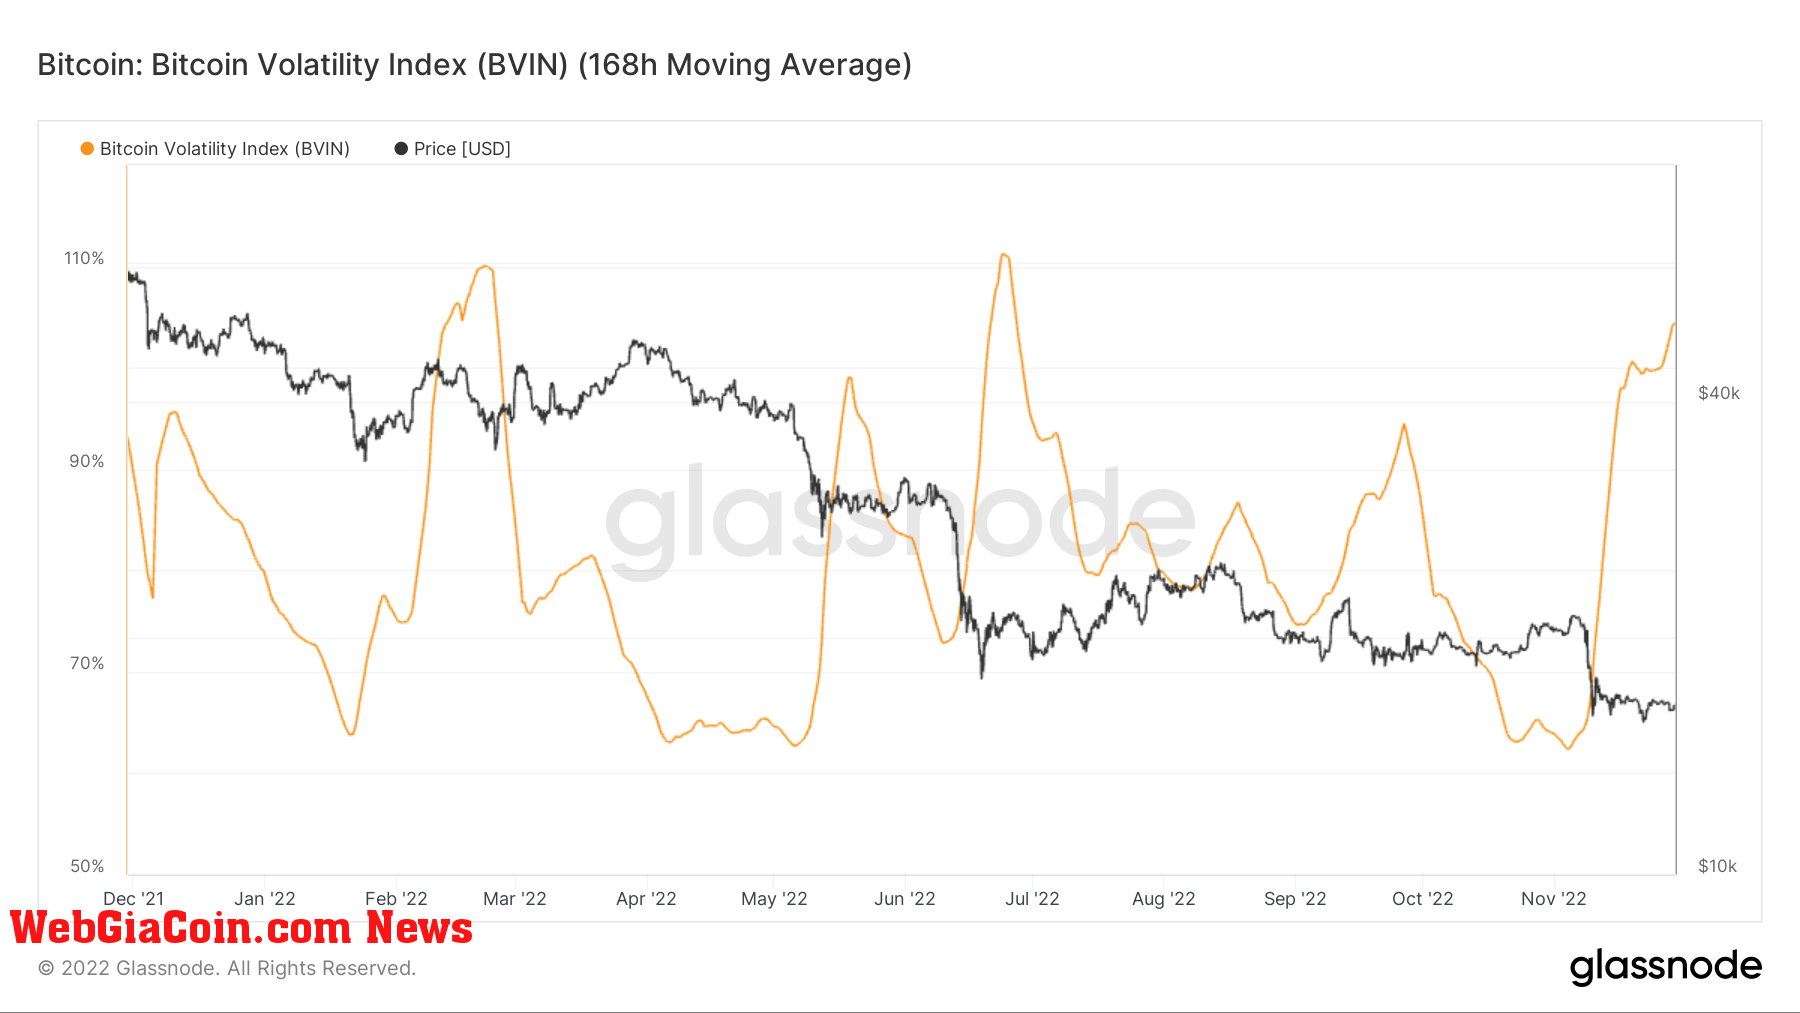 Bitcoin Volatility Index since December 2021